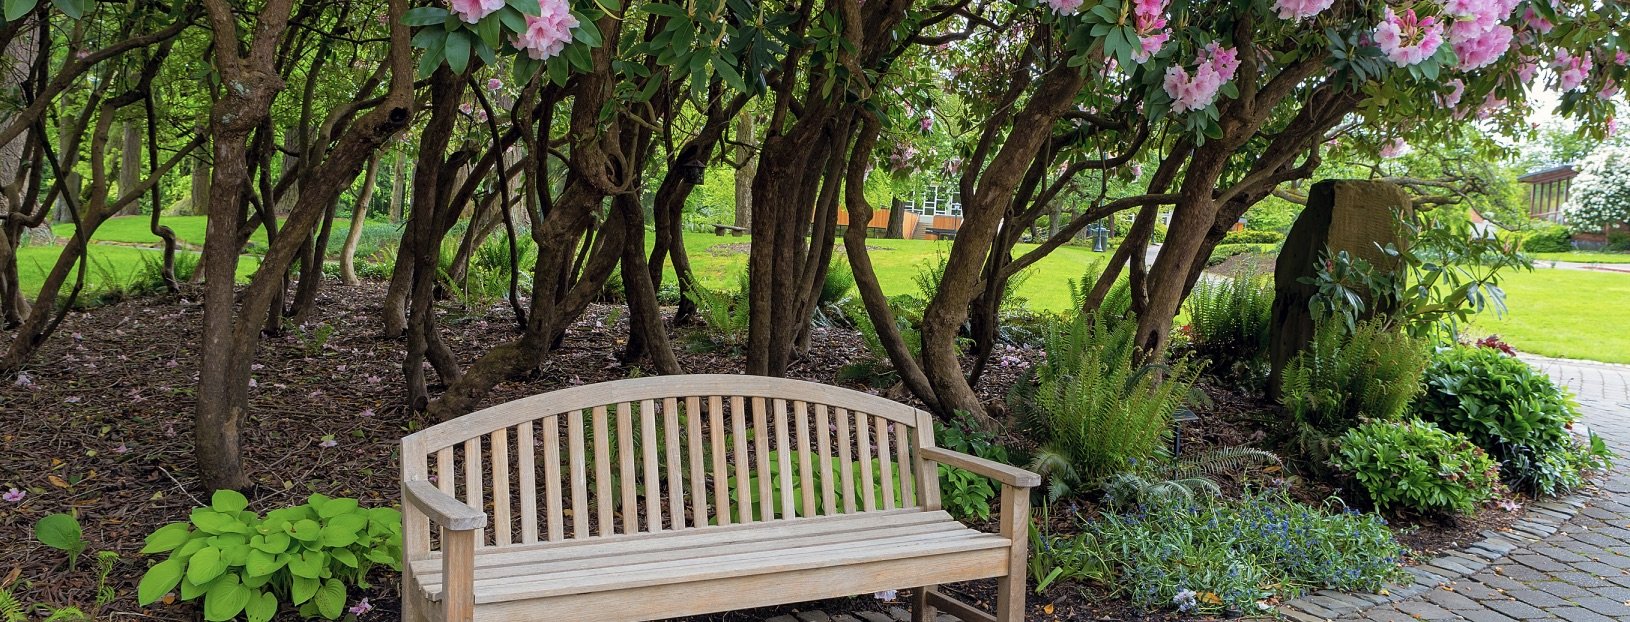 contemplation garden with bench